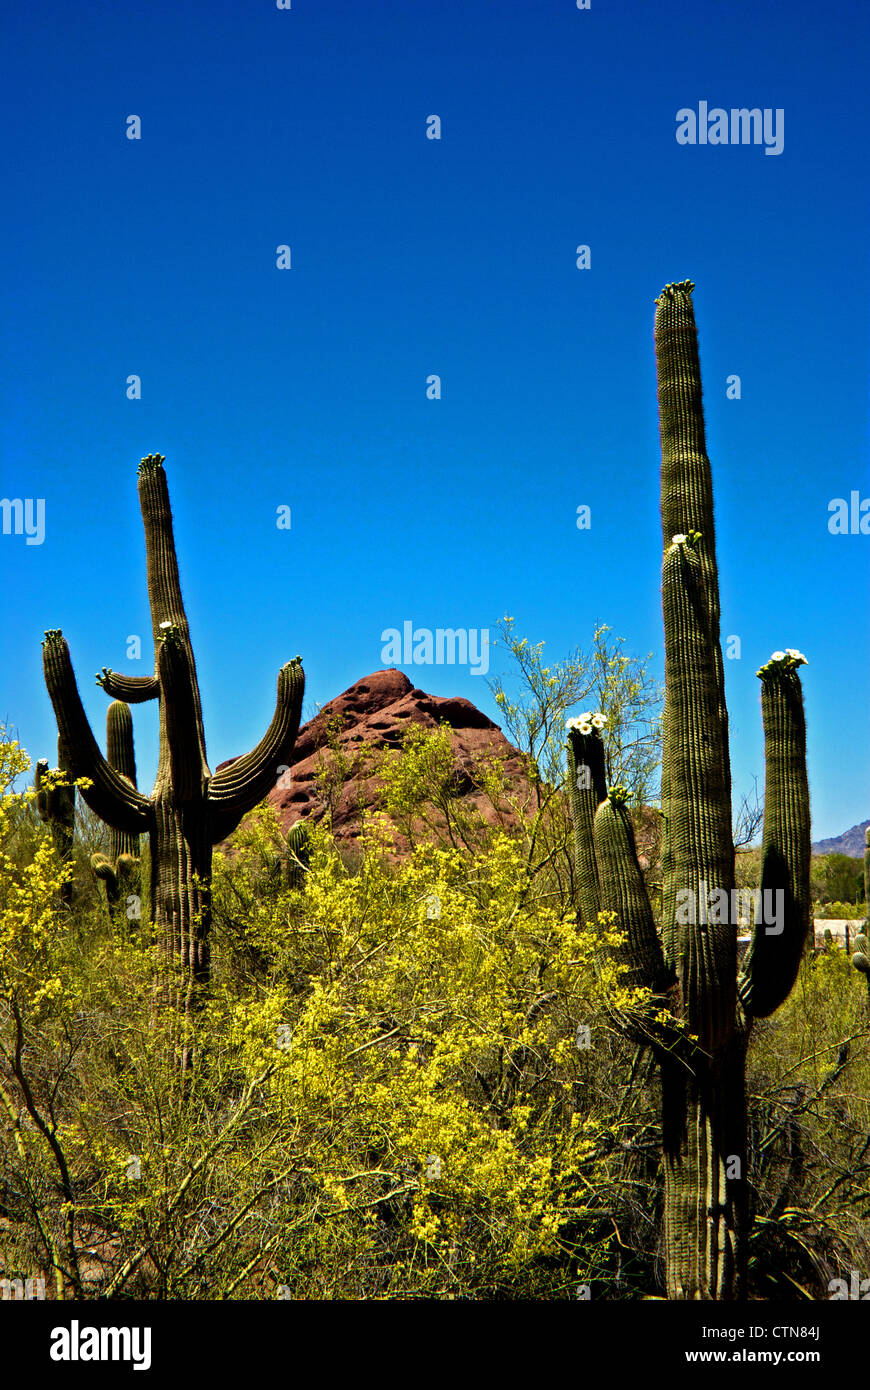 Saguaro cacti in bloom at the Desert Botanical Garden Stock Photo